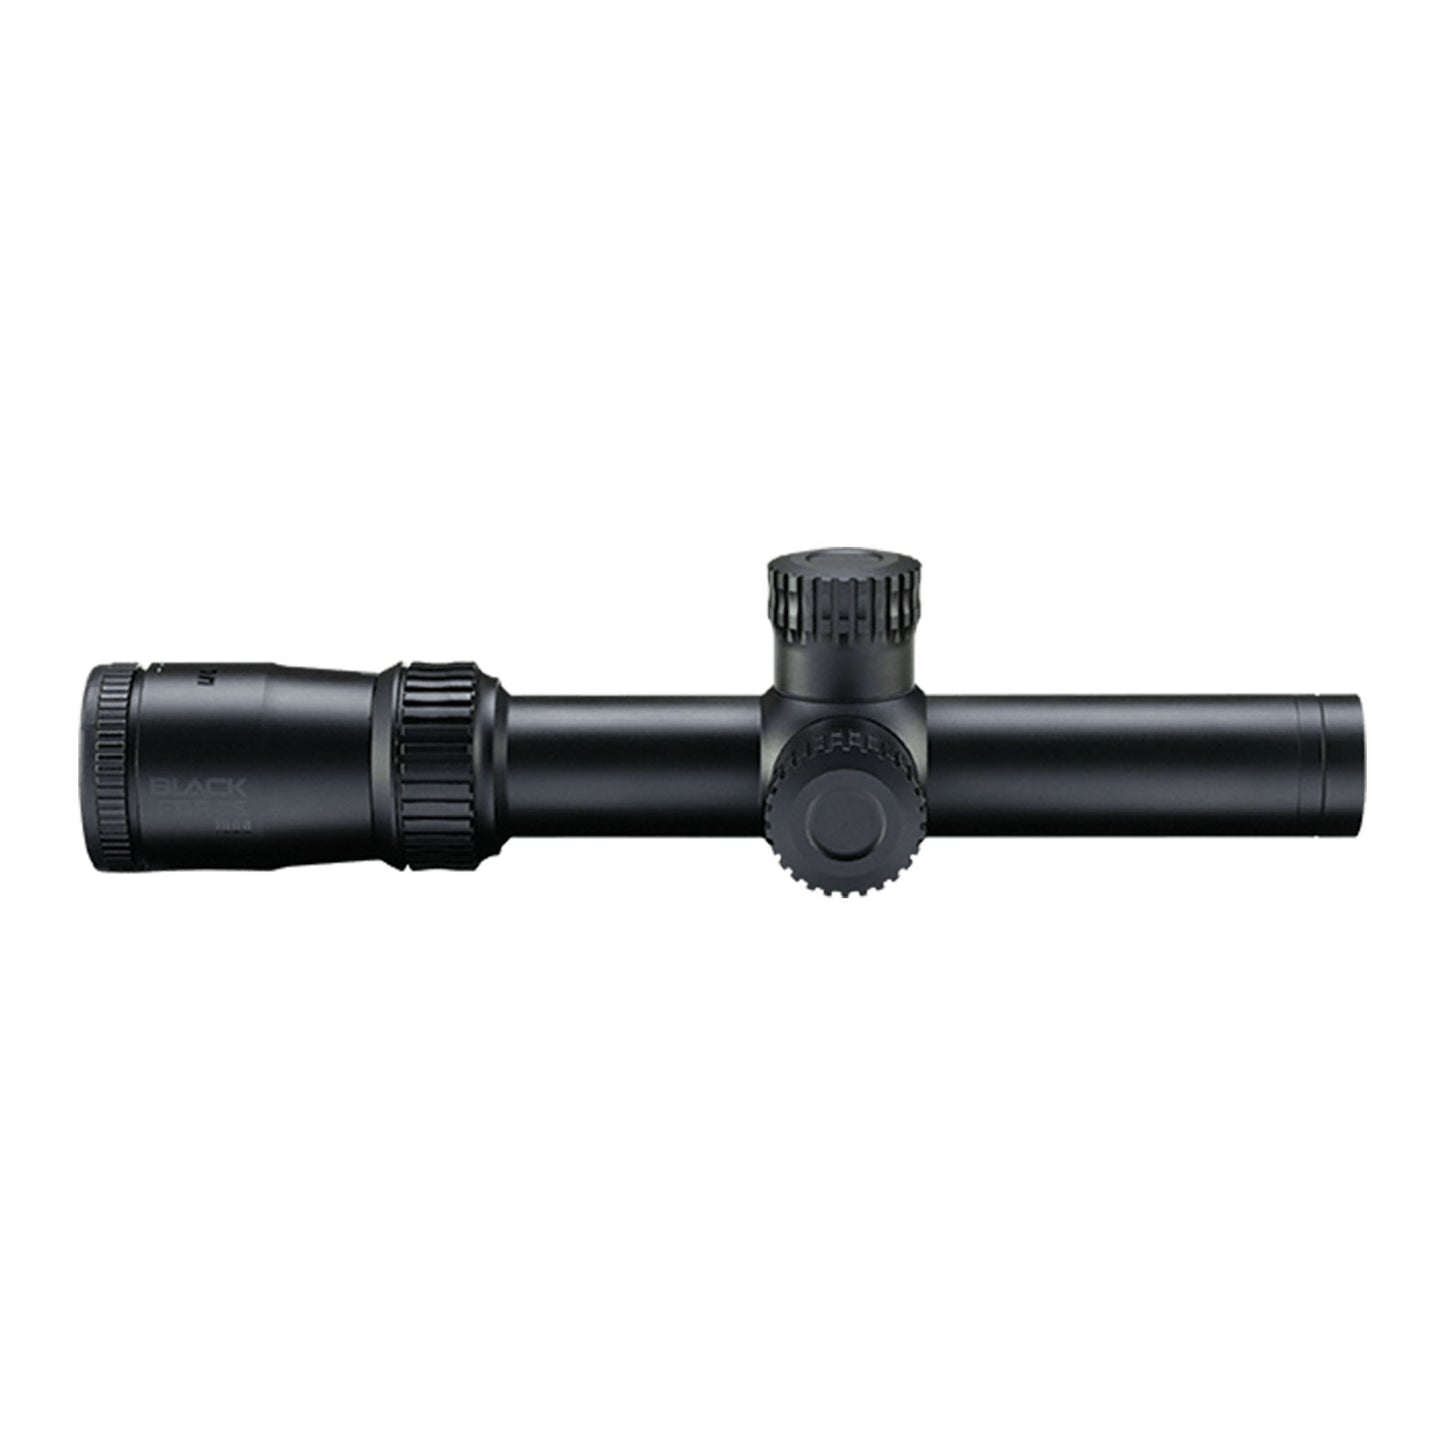 Black Force 1000, 1-4x24mm Riflescope